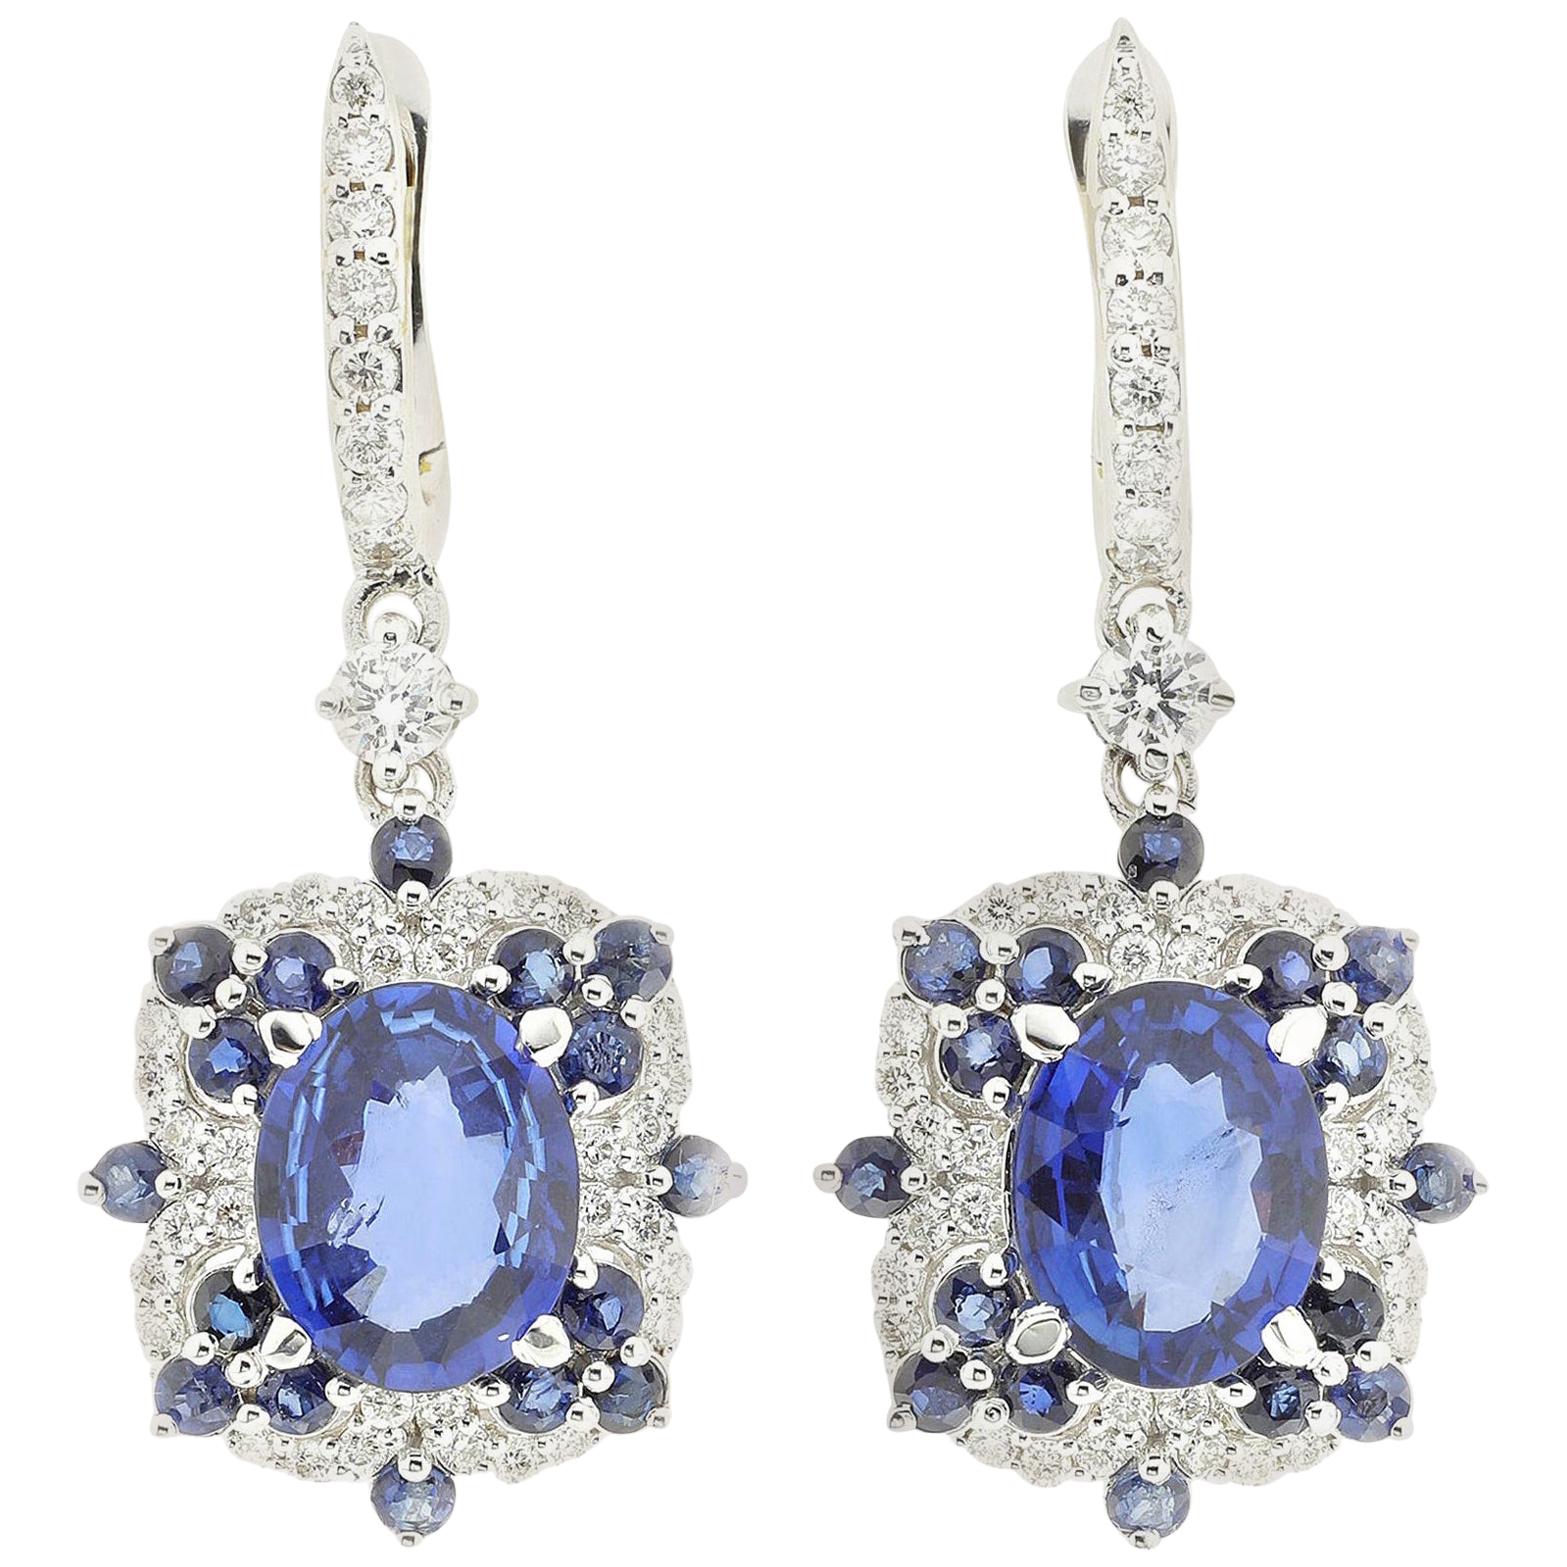 Contemporary 18 Karat White Gold Diamond (G VS) and Blue Sapphire Drop Earrings